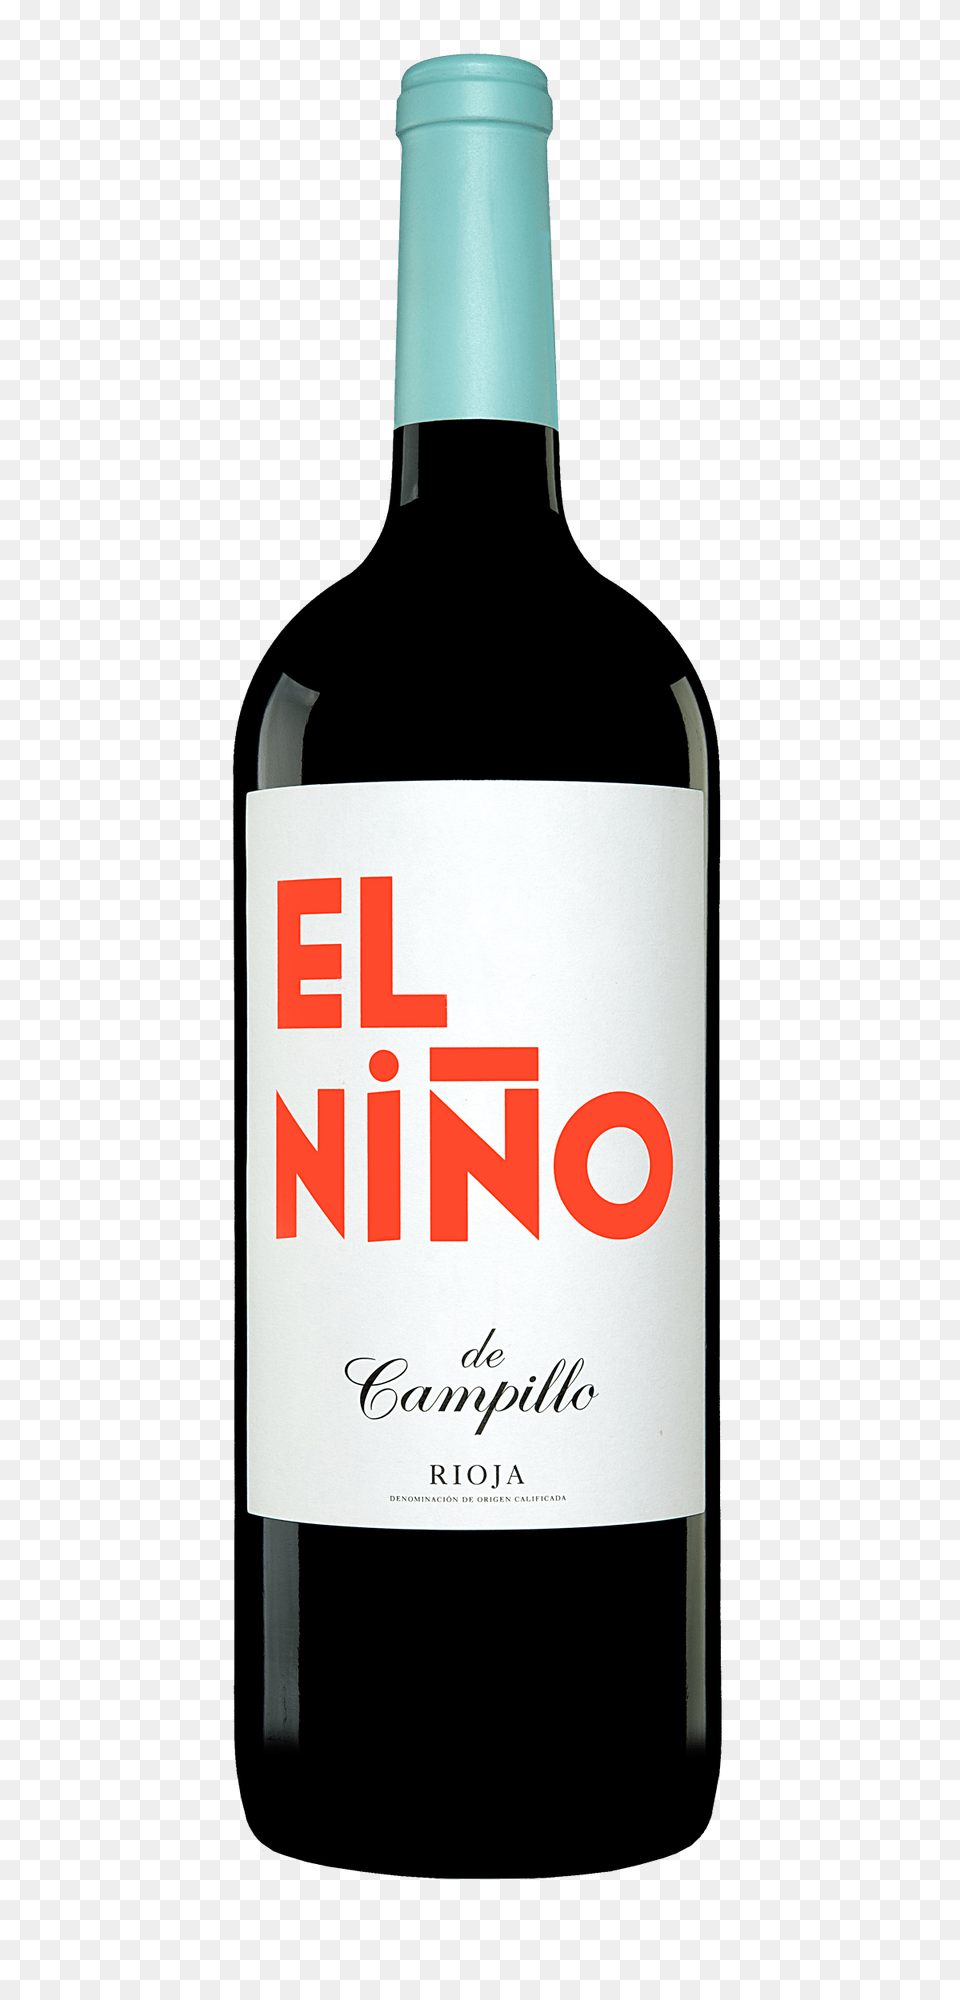 Elninodecampillo Desembarco Spanish Wine, Alcohol, Beverage, Bottle, Liquor Png Image